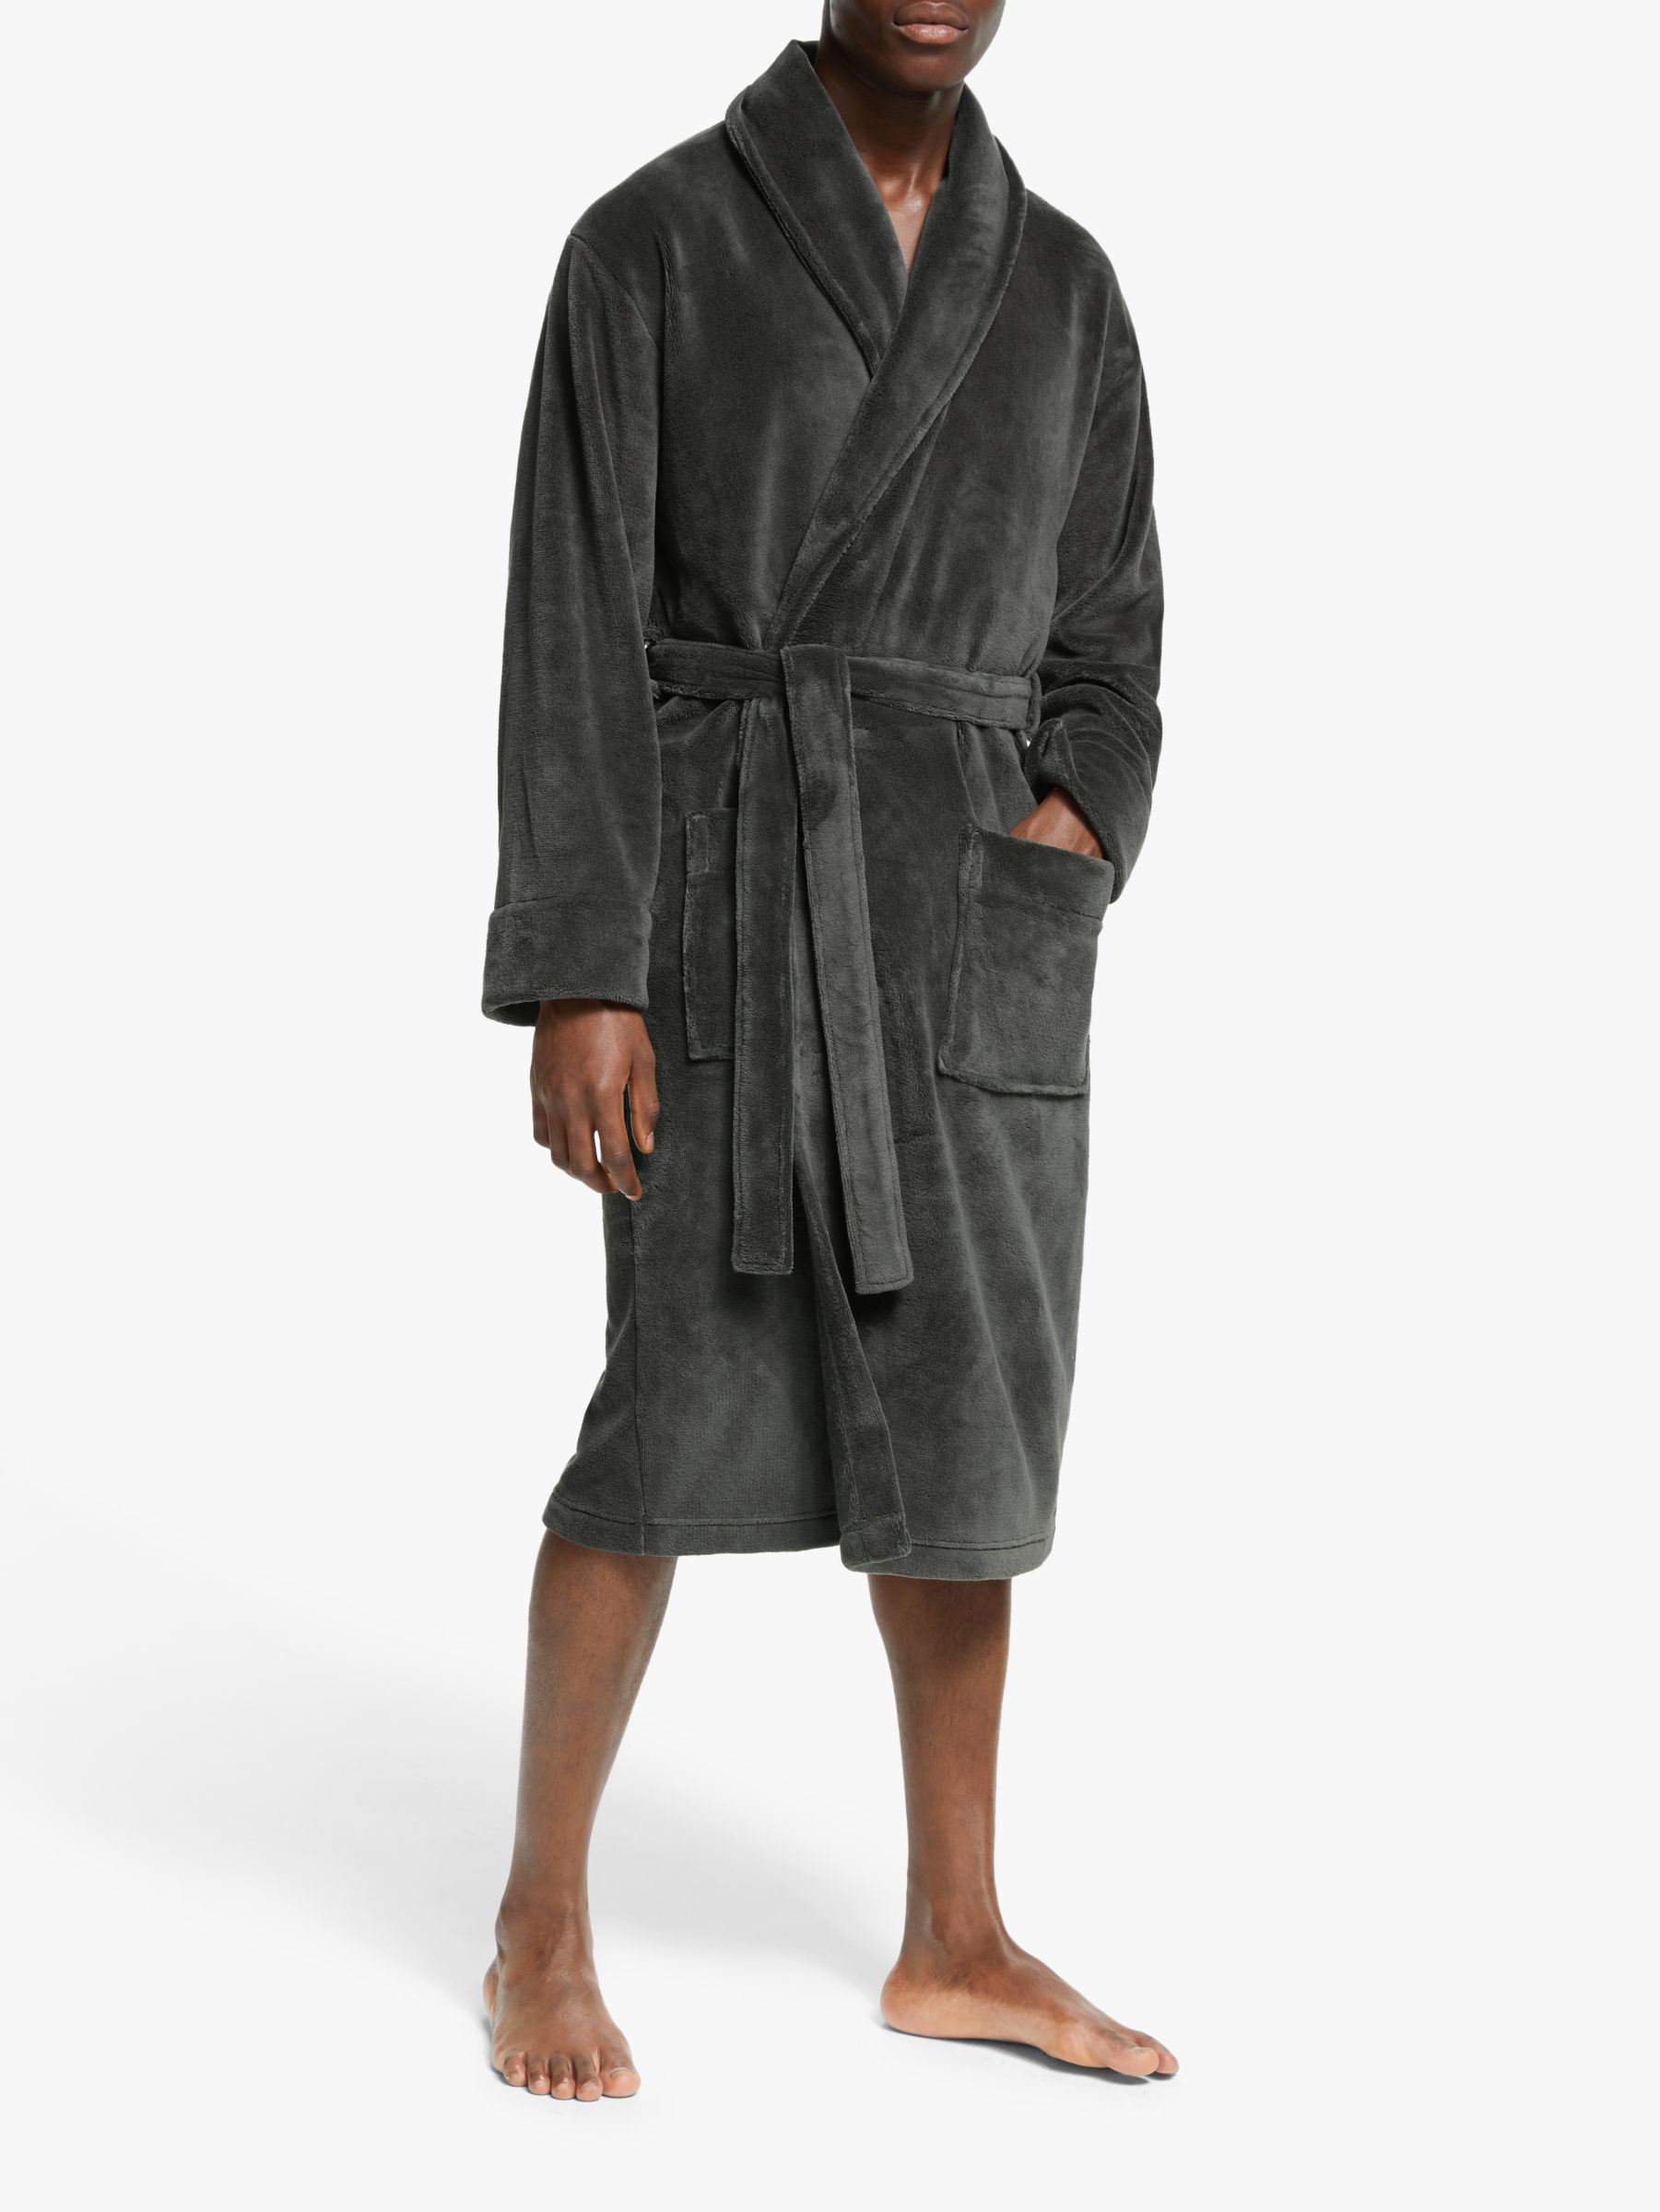 John Lewis & Partners Sheared Fleece Robe, Grey, L